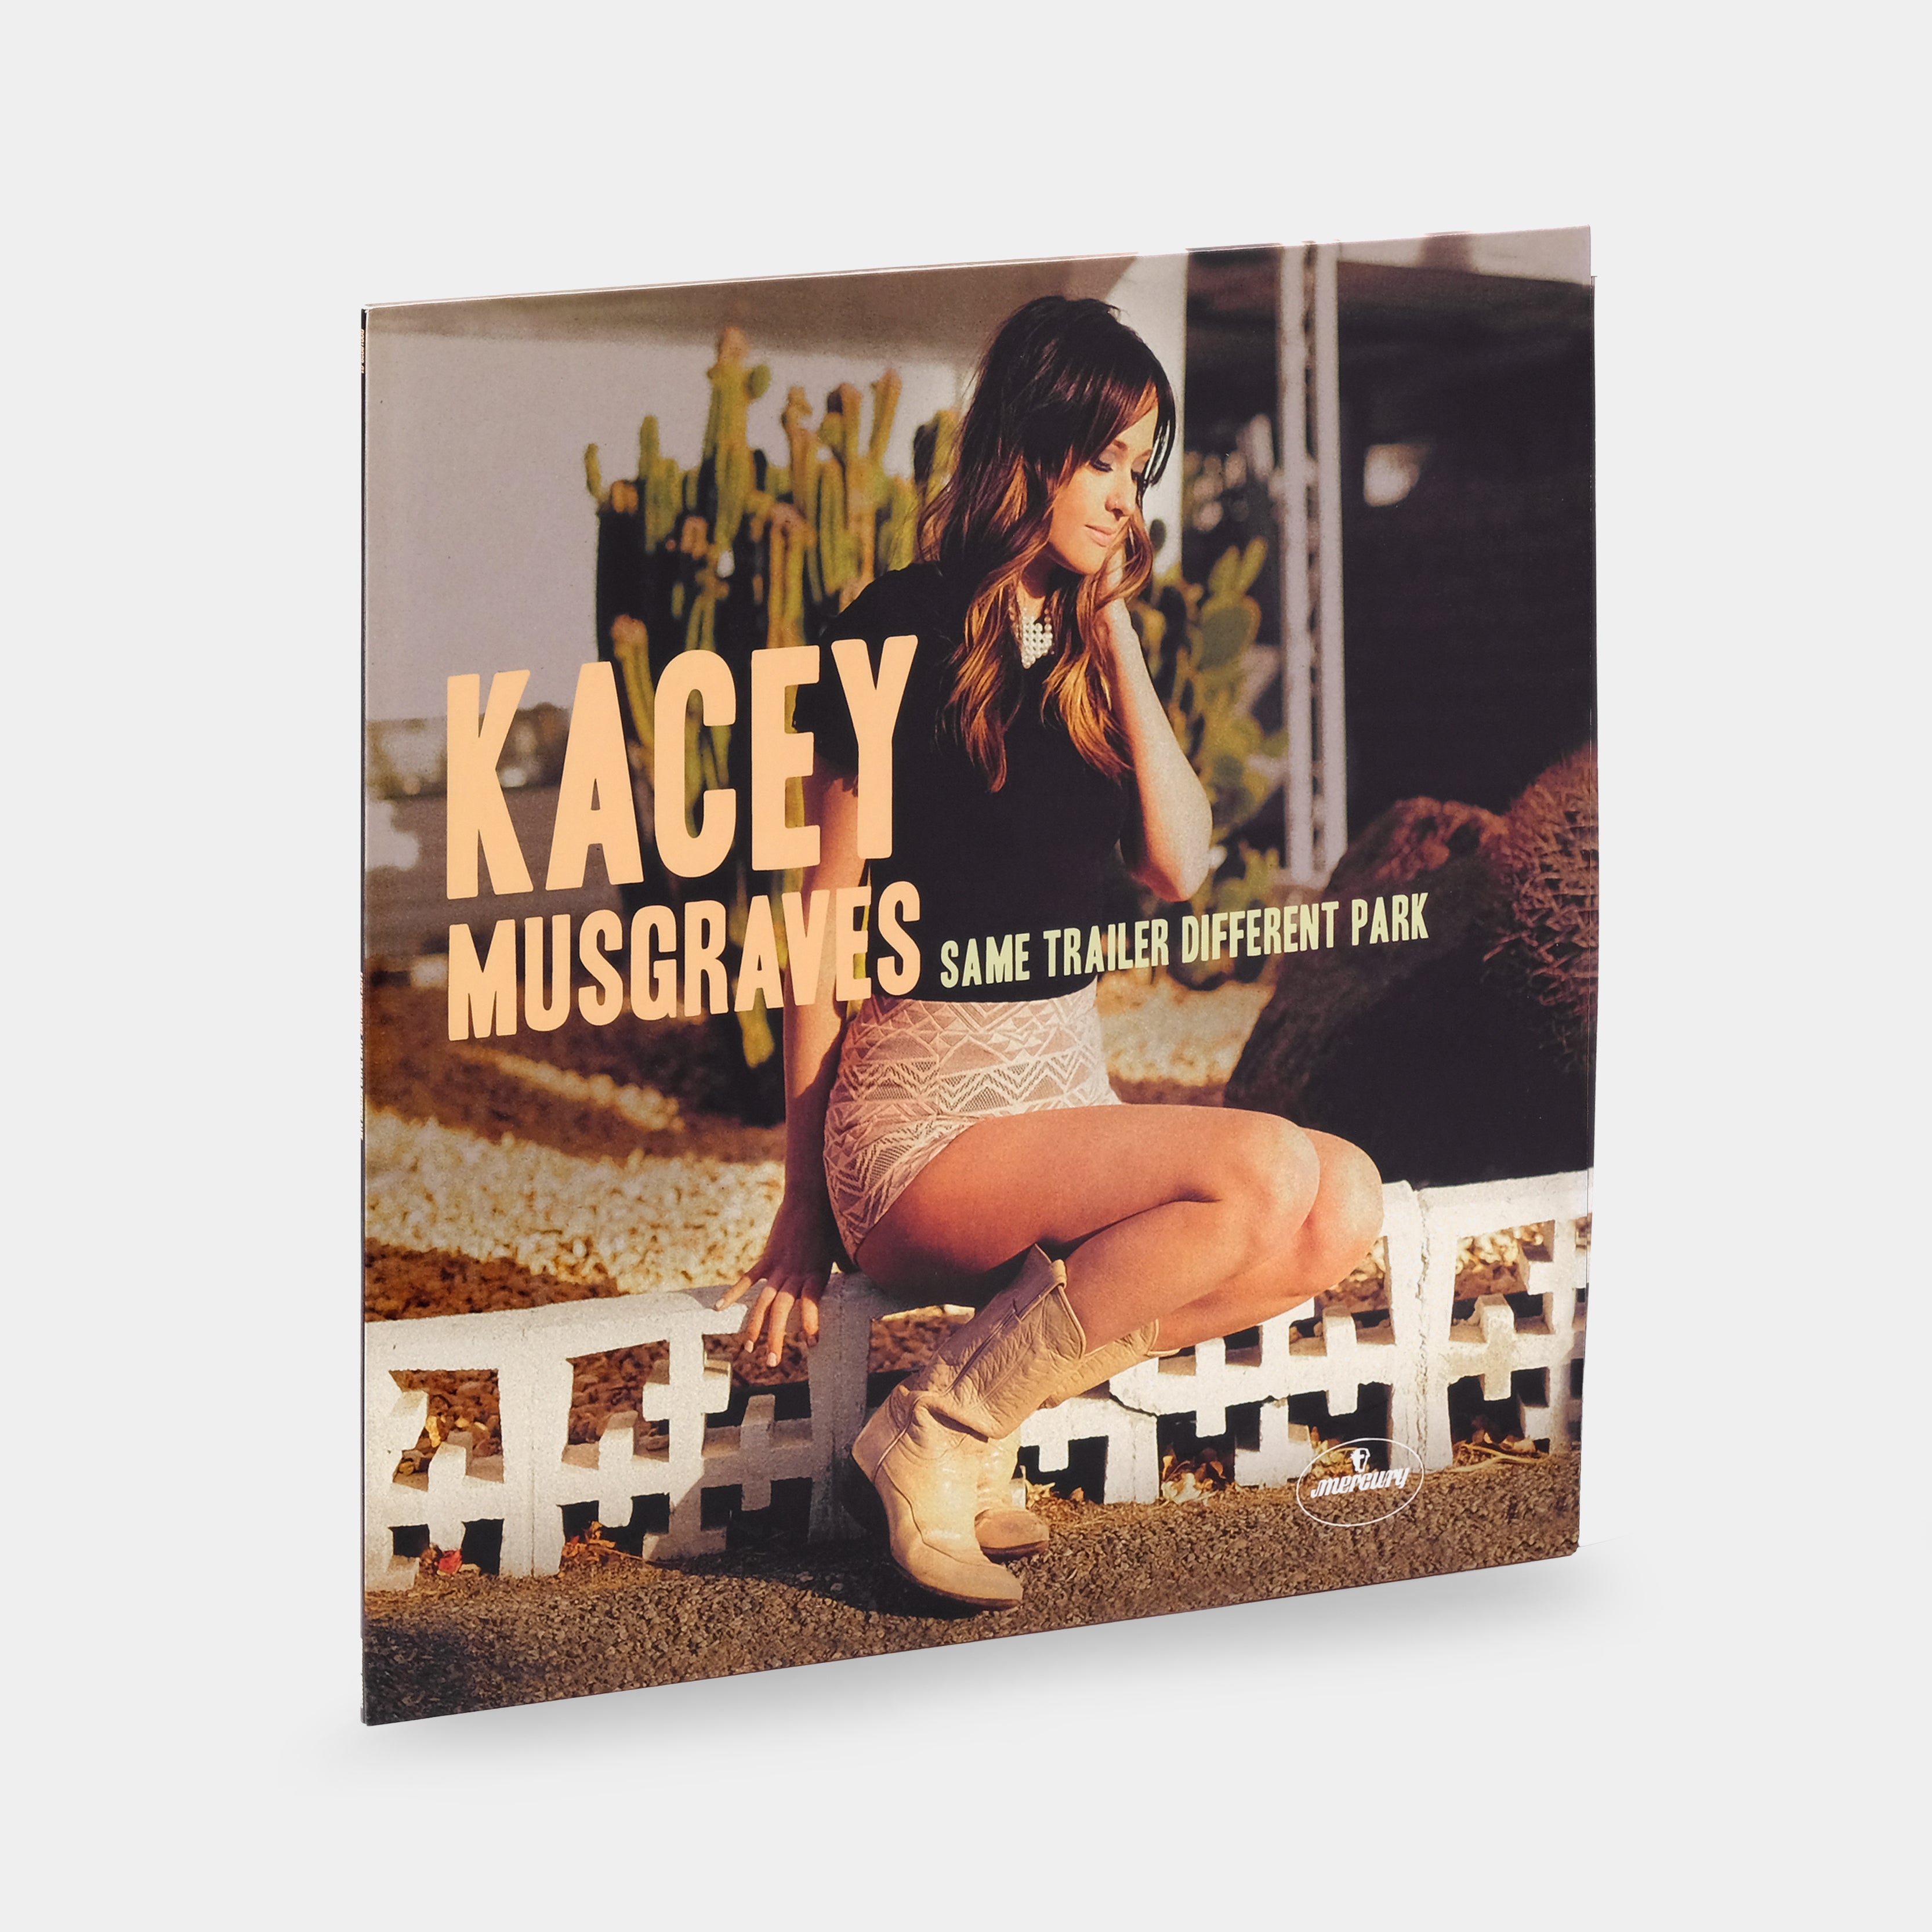 Kacey Musgraves - Same Trailer Different Park LP Vinyl Record